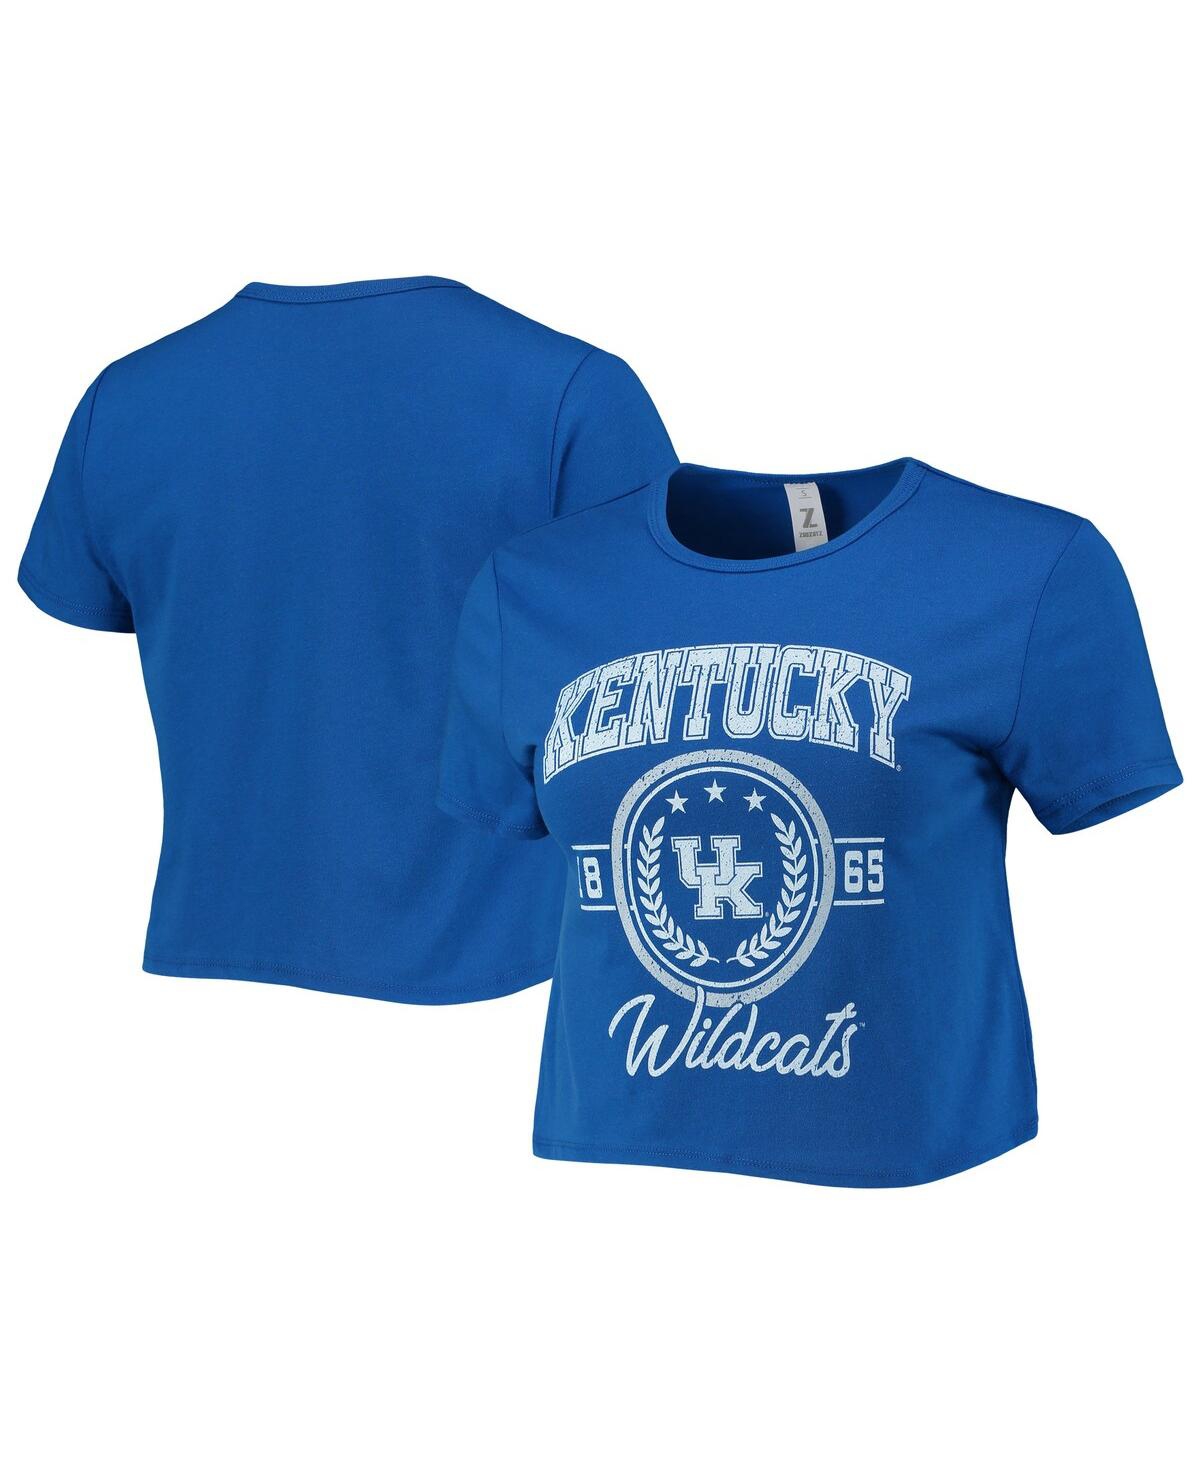 Women's ZooZatz Royal Distressed Kentucky Wildcats Core Laurels Cropped T-shirt - Royal